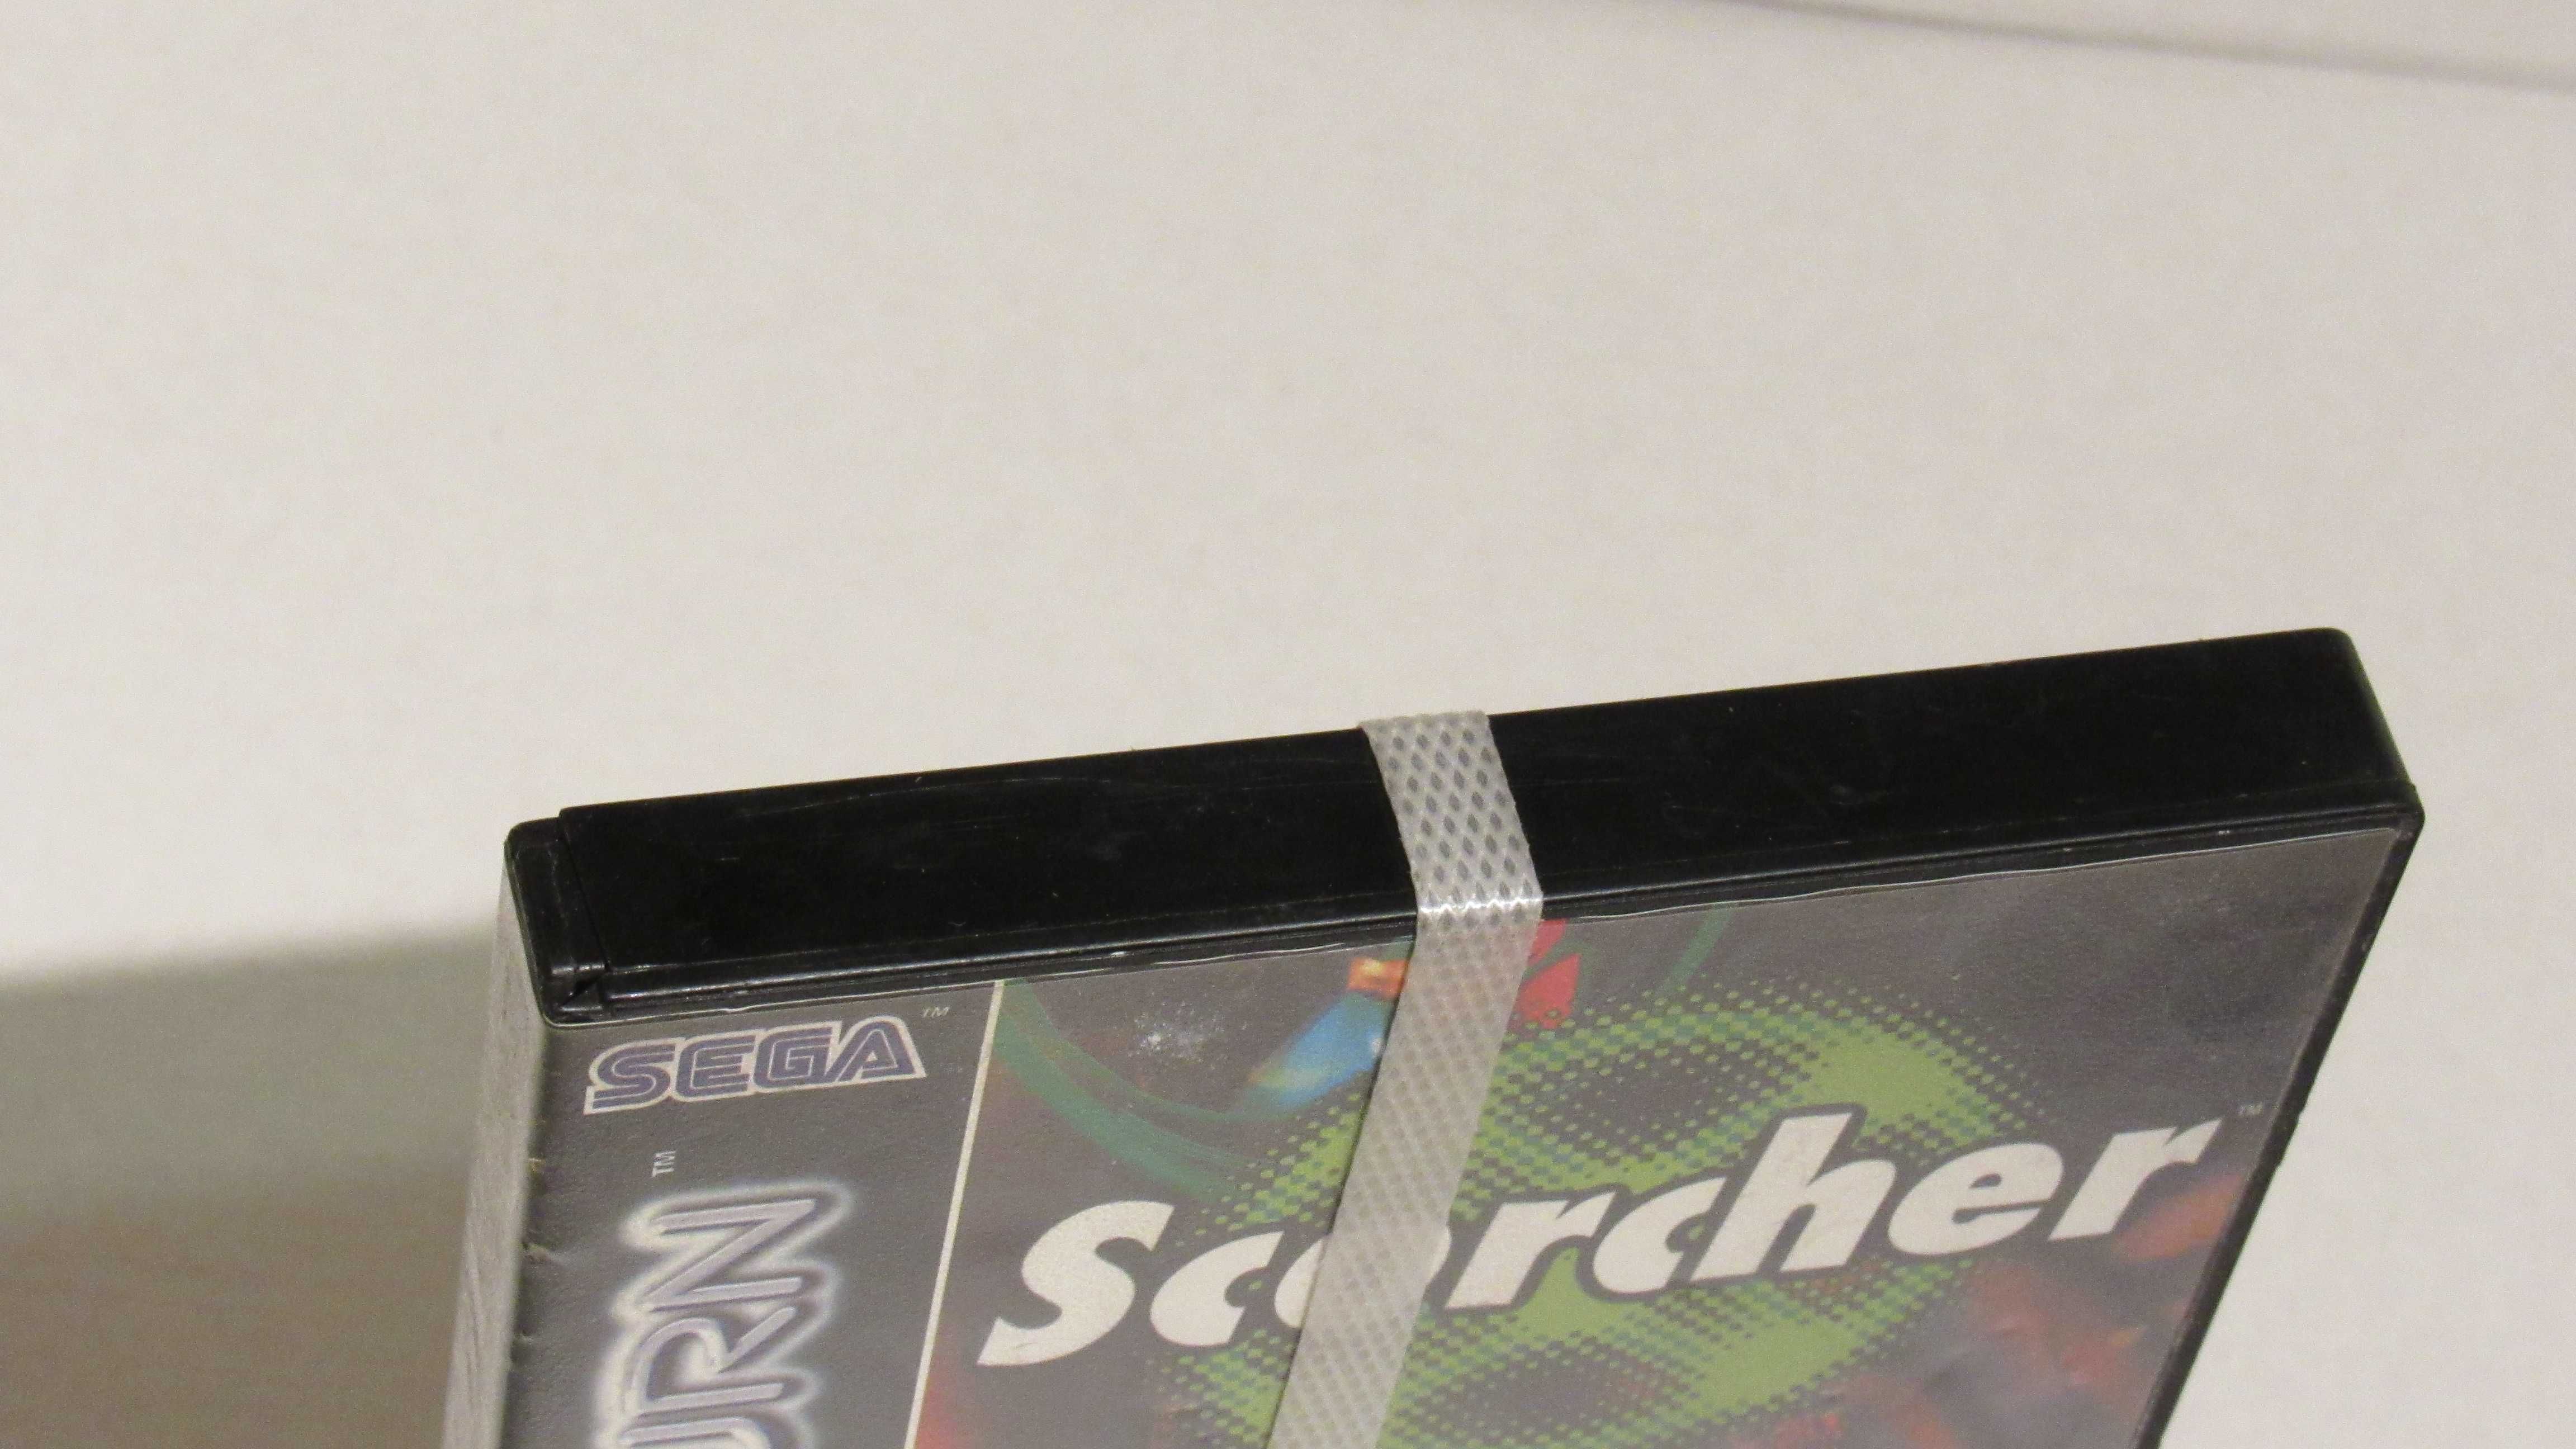 Jogo Sega Saturn Scorcher novo selado